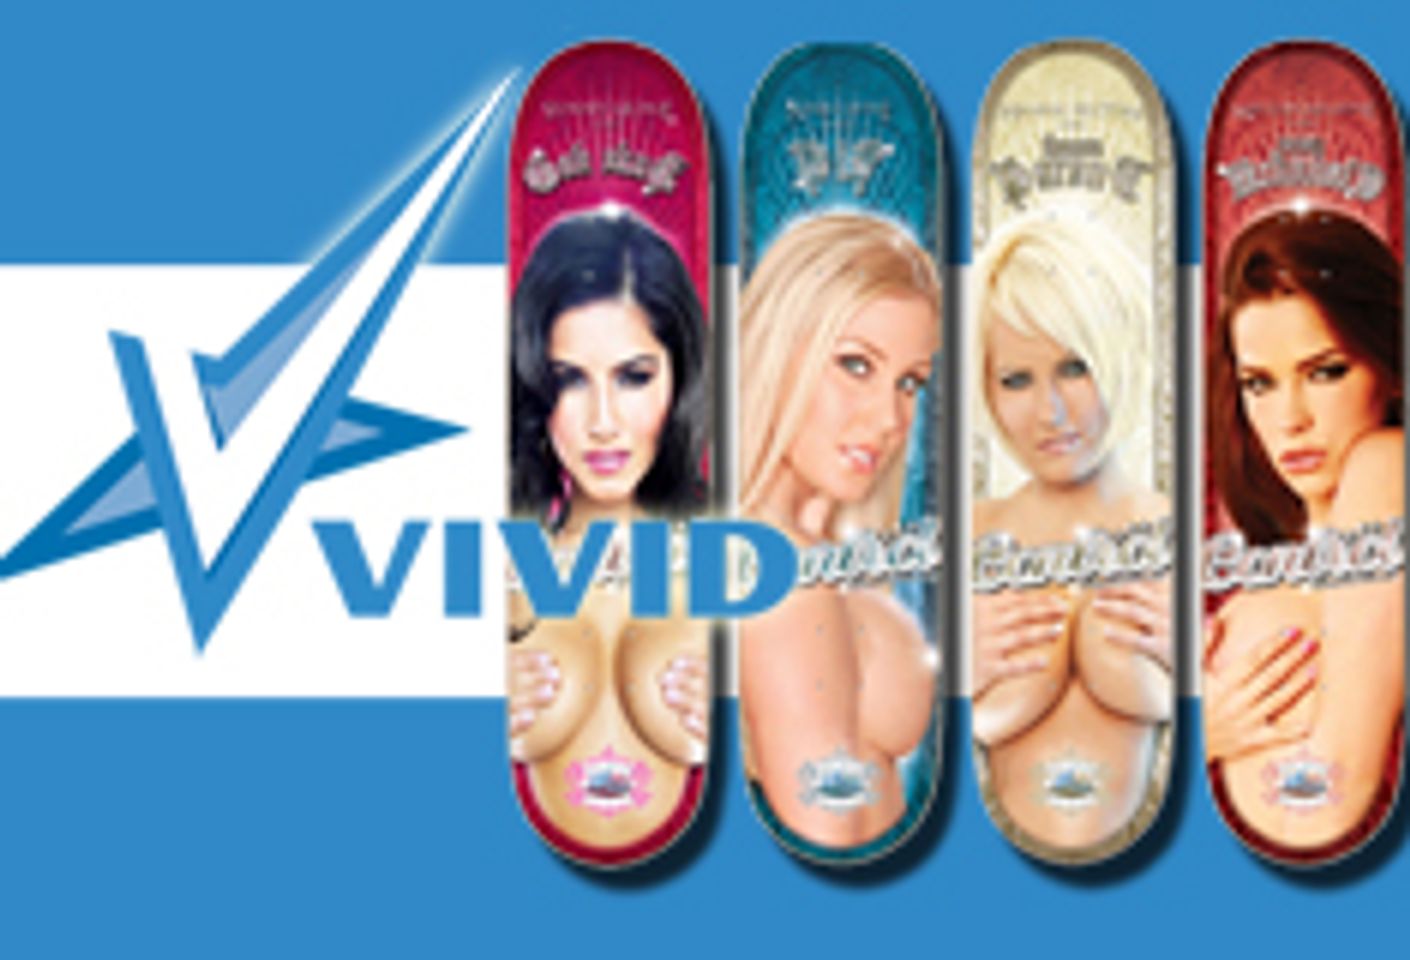 Control MFG To Introduce Vivid Girl Skateboards